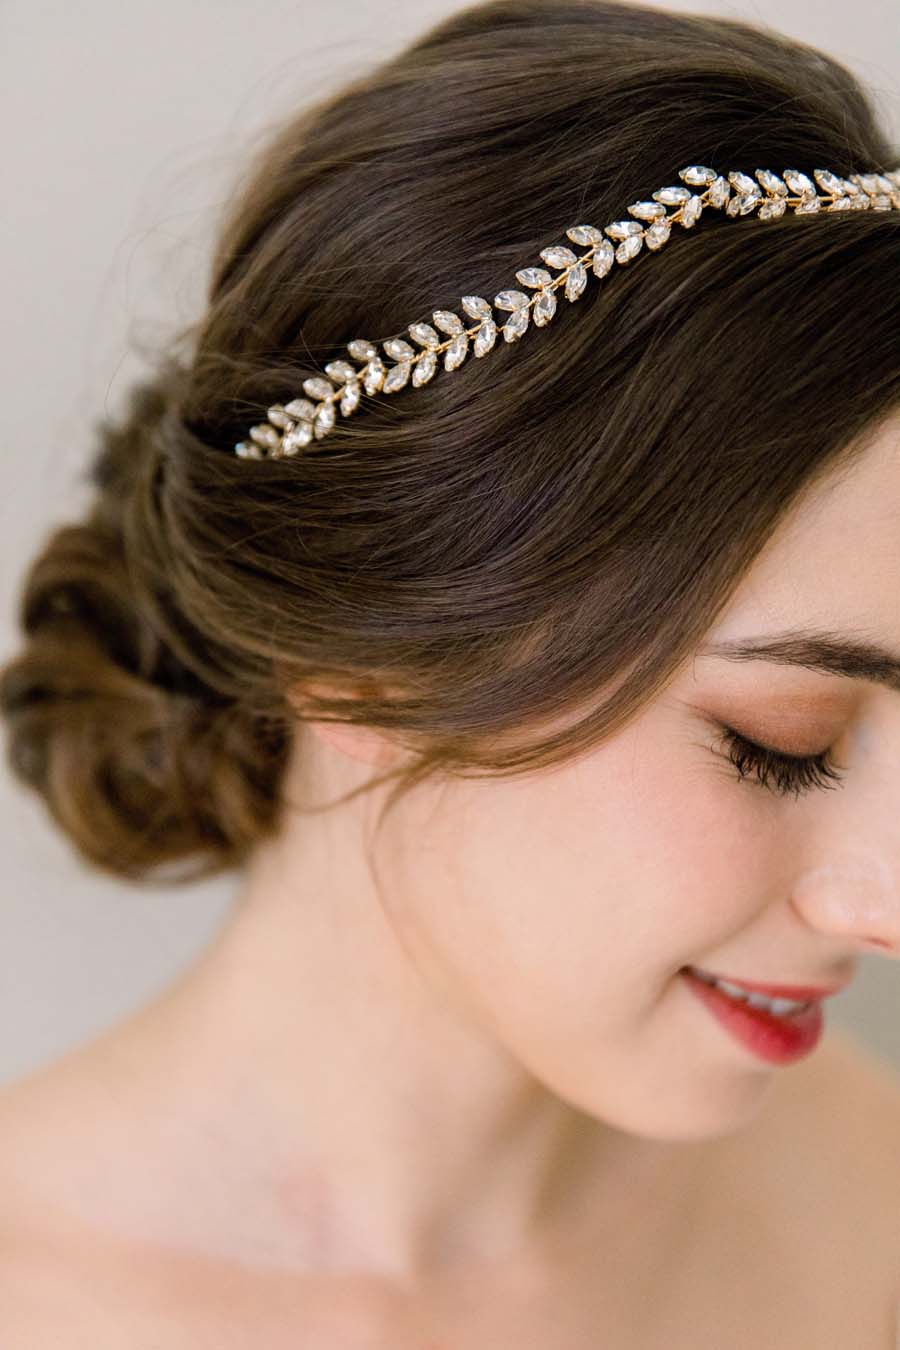 SWEETV Luxury Rhinestone Wedding Belt Bridal Sash Belt Crystal Dress Headband DIY Accessories 